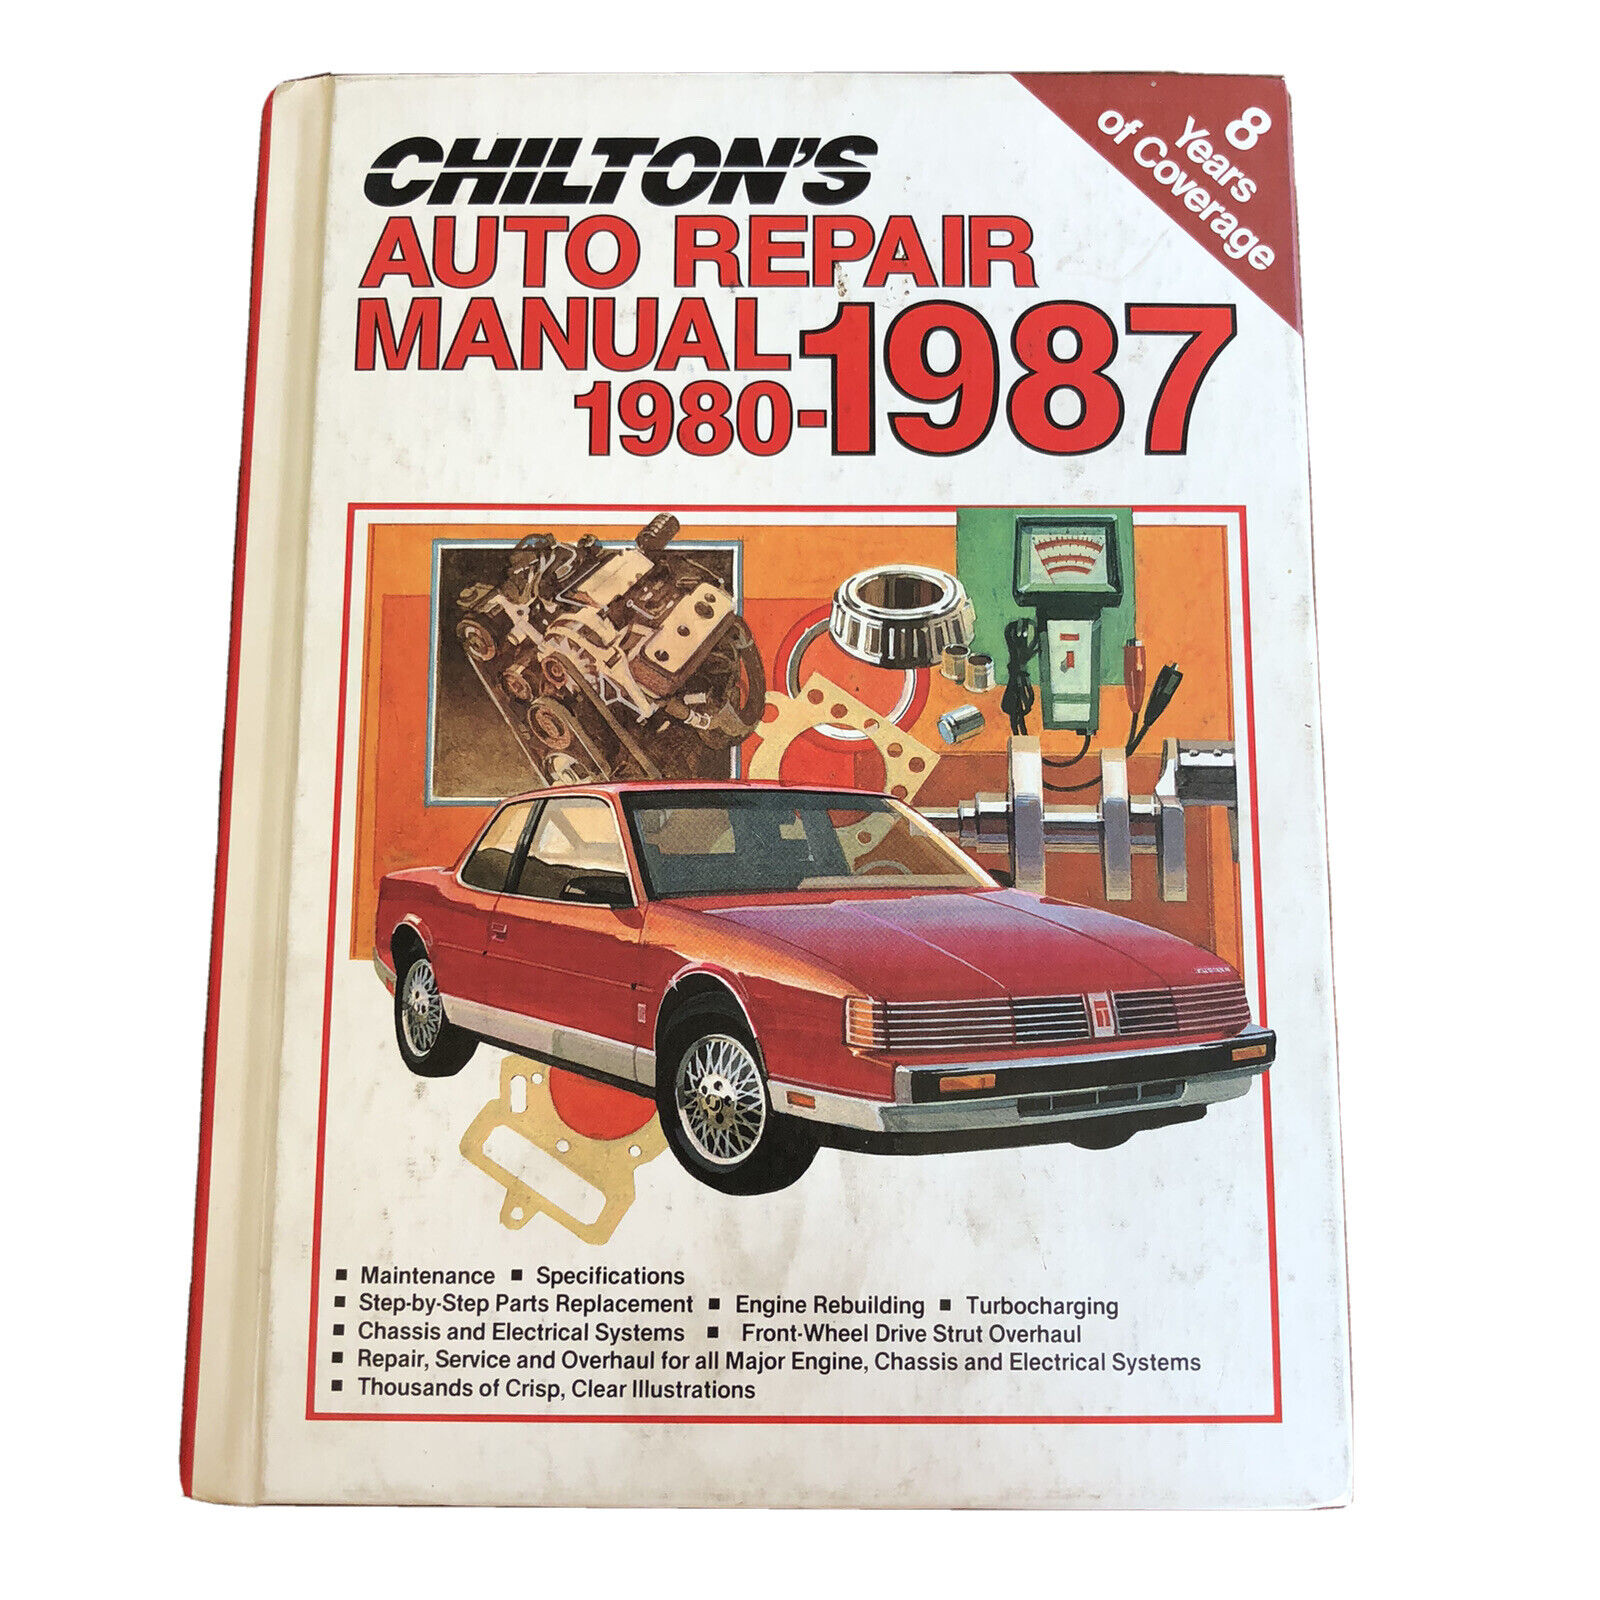 Vintage Chilton's Auto Repair Manual 1980-1987 Preowned